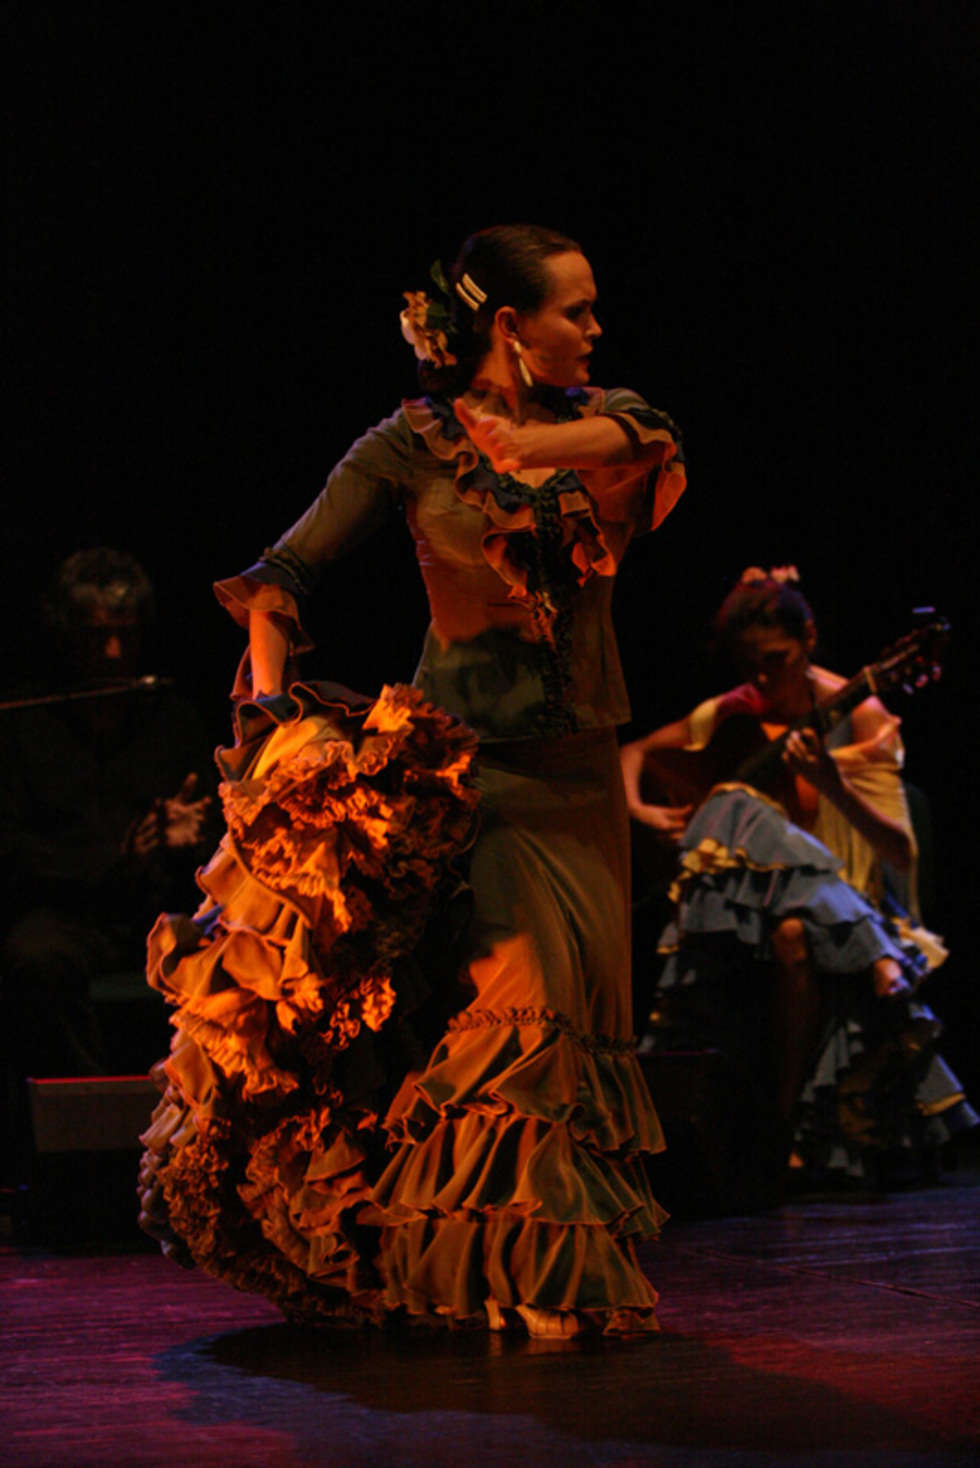  Festiwal Fiesta Alegria - koncert Solo Flamenco